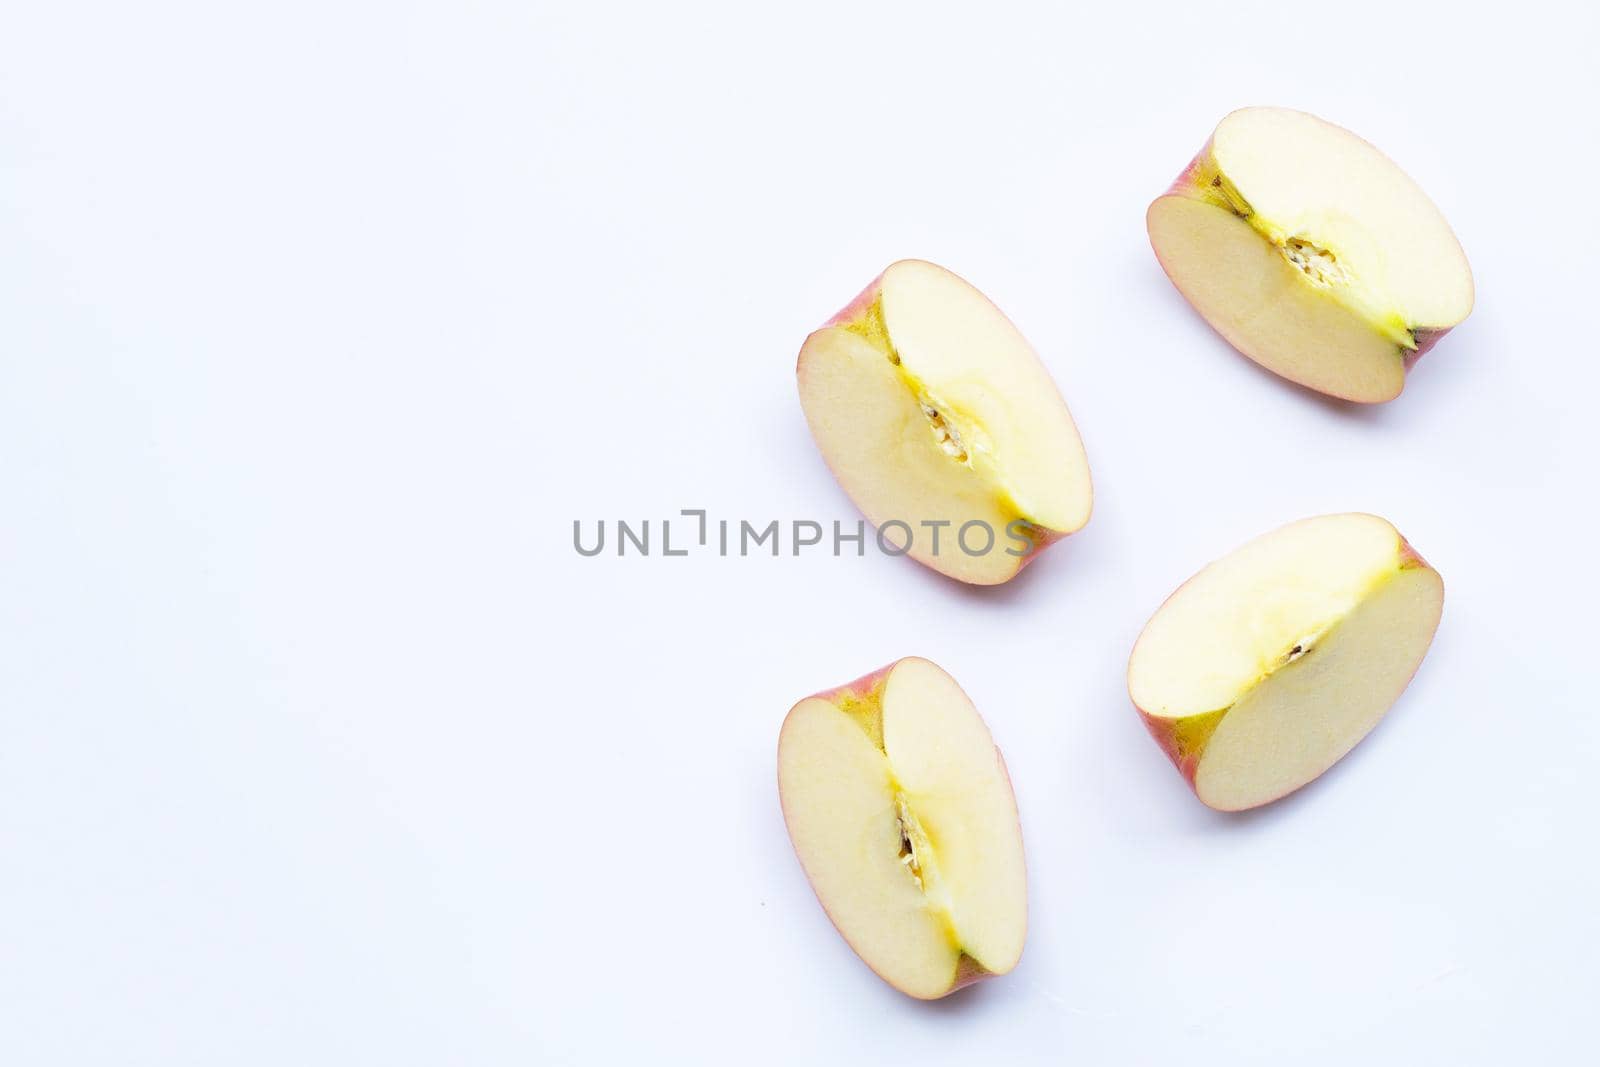 Ripe apple slices on white background.